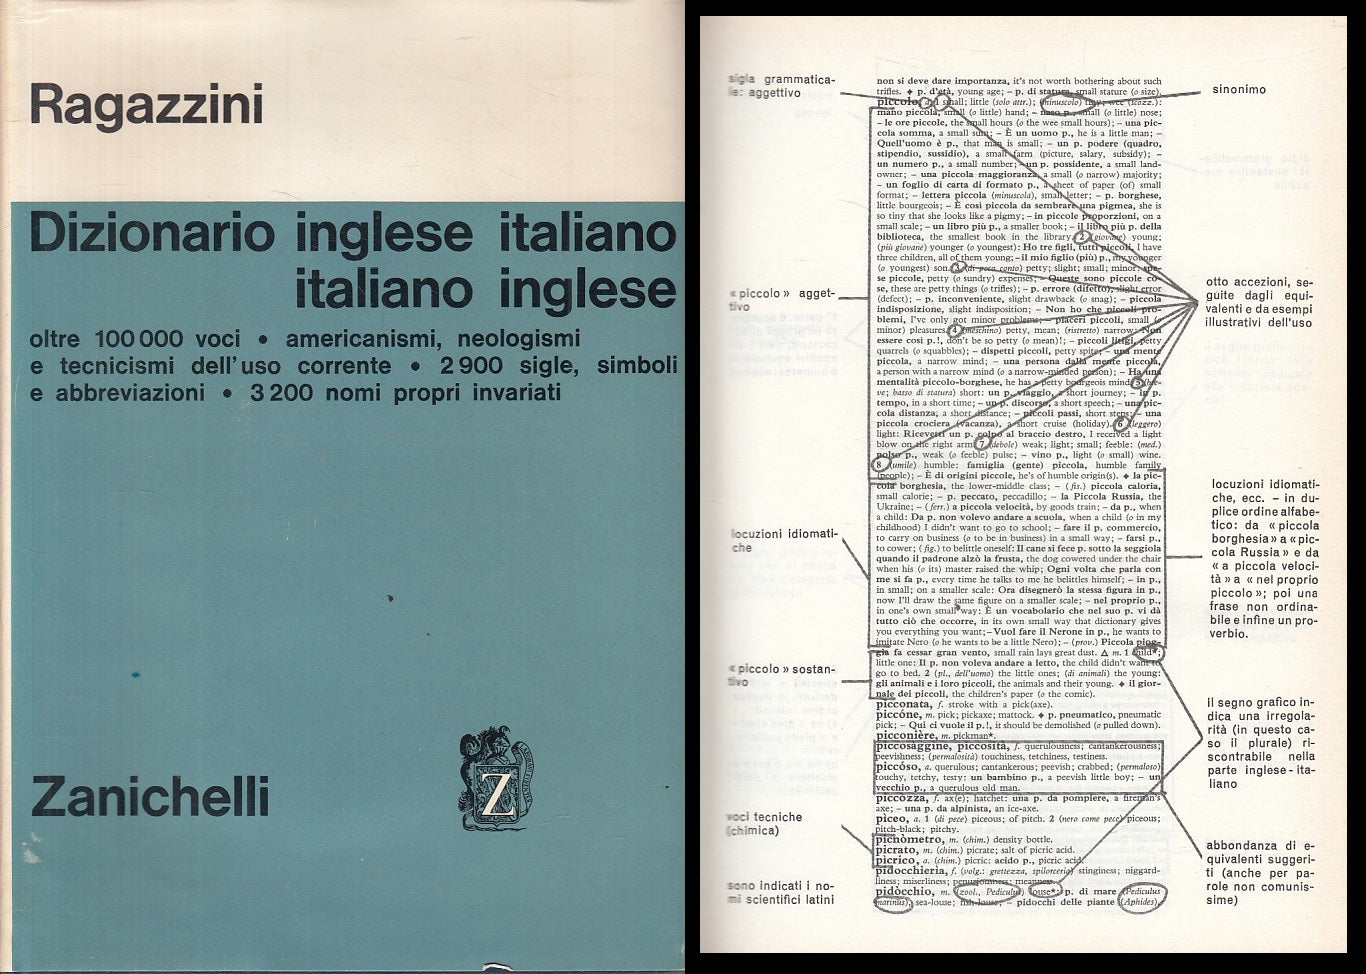 Dizionario inglese. Italiano-inglese, inglese-italiano - Lucia